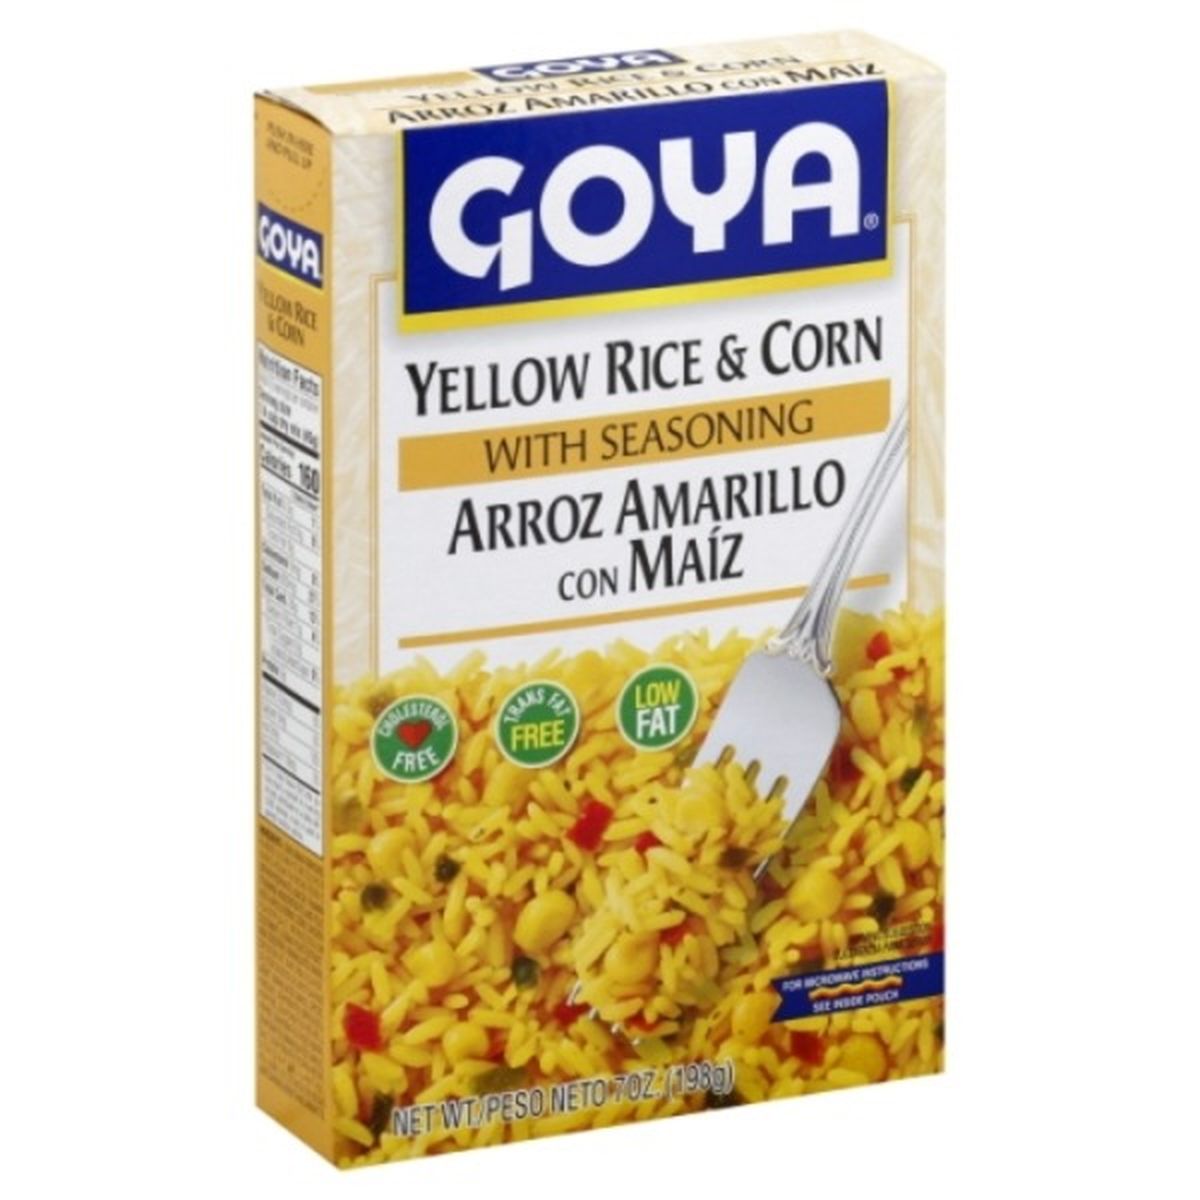 Calories in Goya Yellow Rice & Corn, with Seasoning